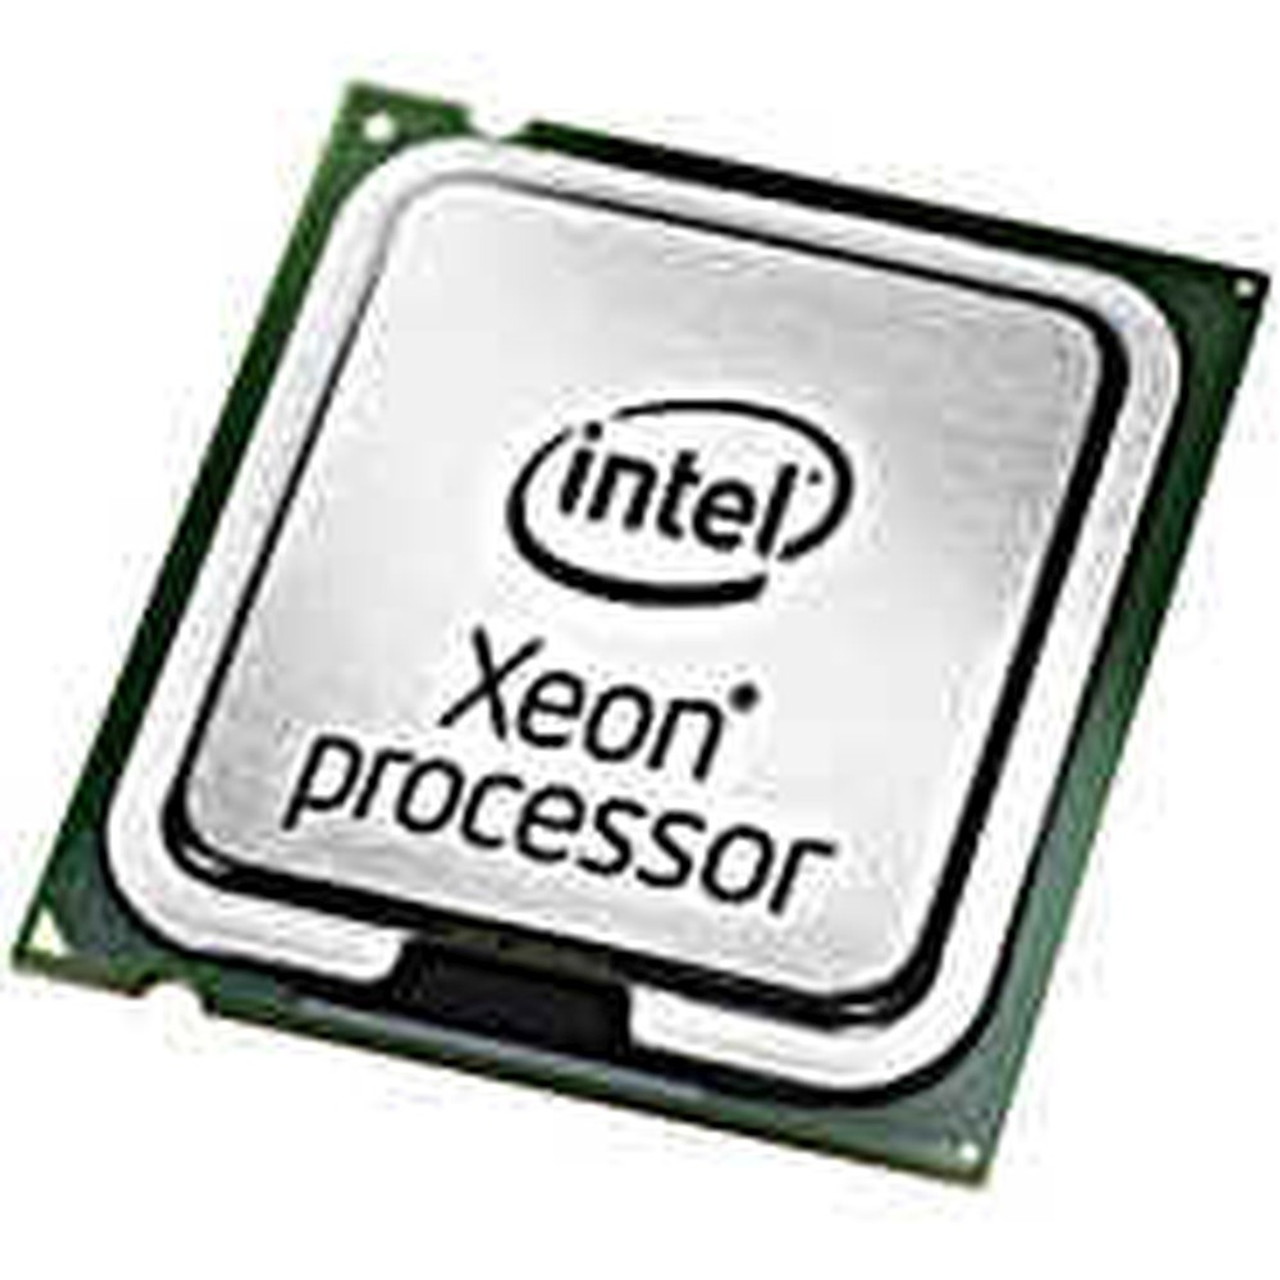 Intel Xeon SLG9K Dell P249G 2.4GHz 12MB 1066MHz FSB Six-Core E7450 CPU  Processor